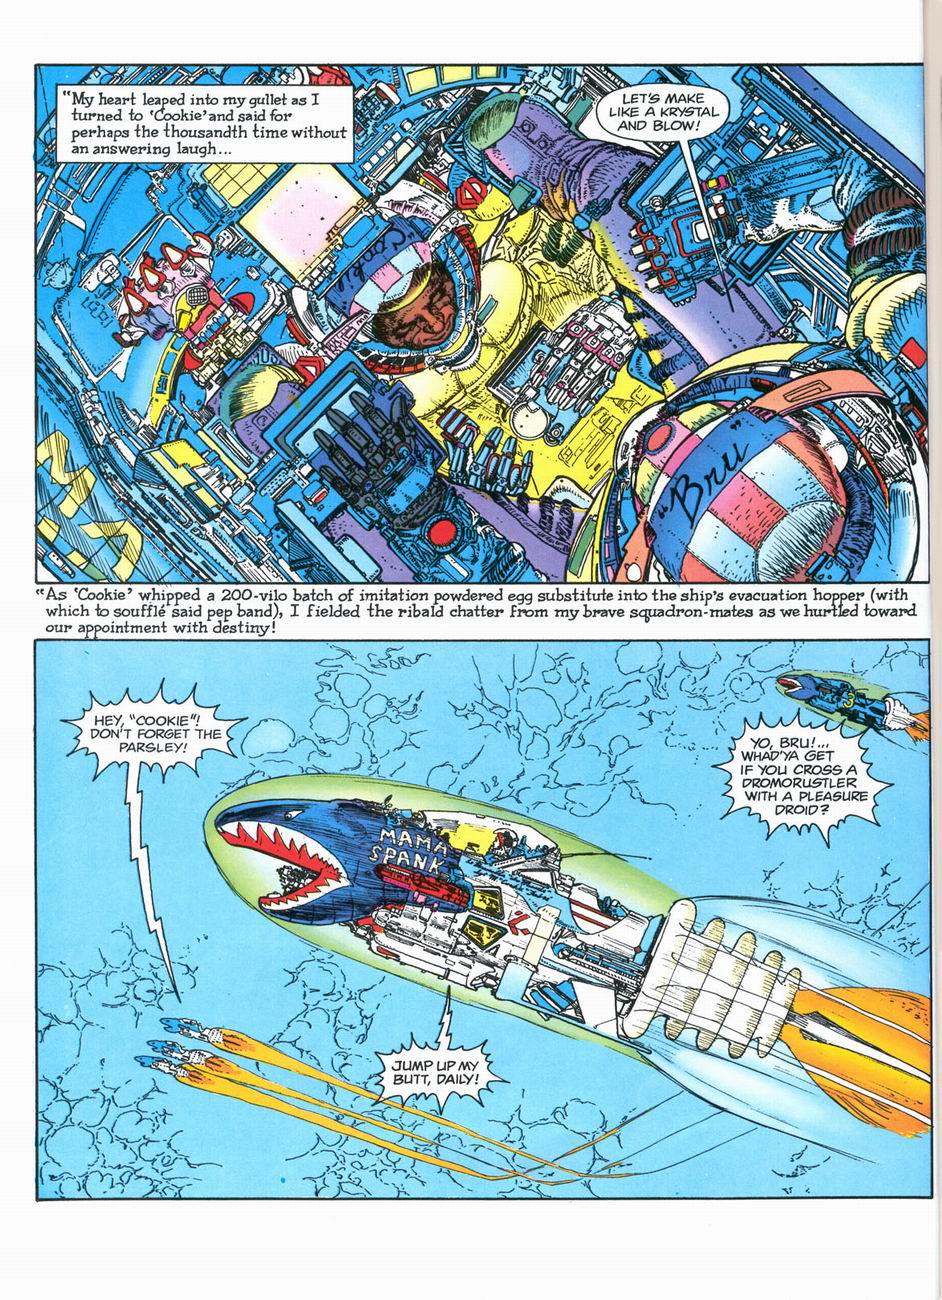 Marvel Graphic Novel issue 13 - Starstruck - Page 45